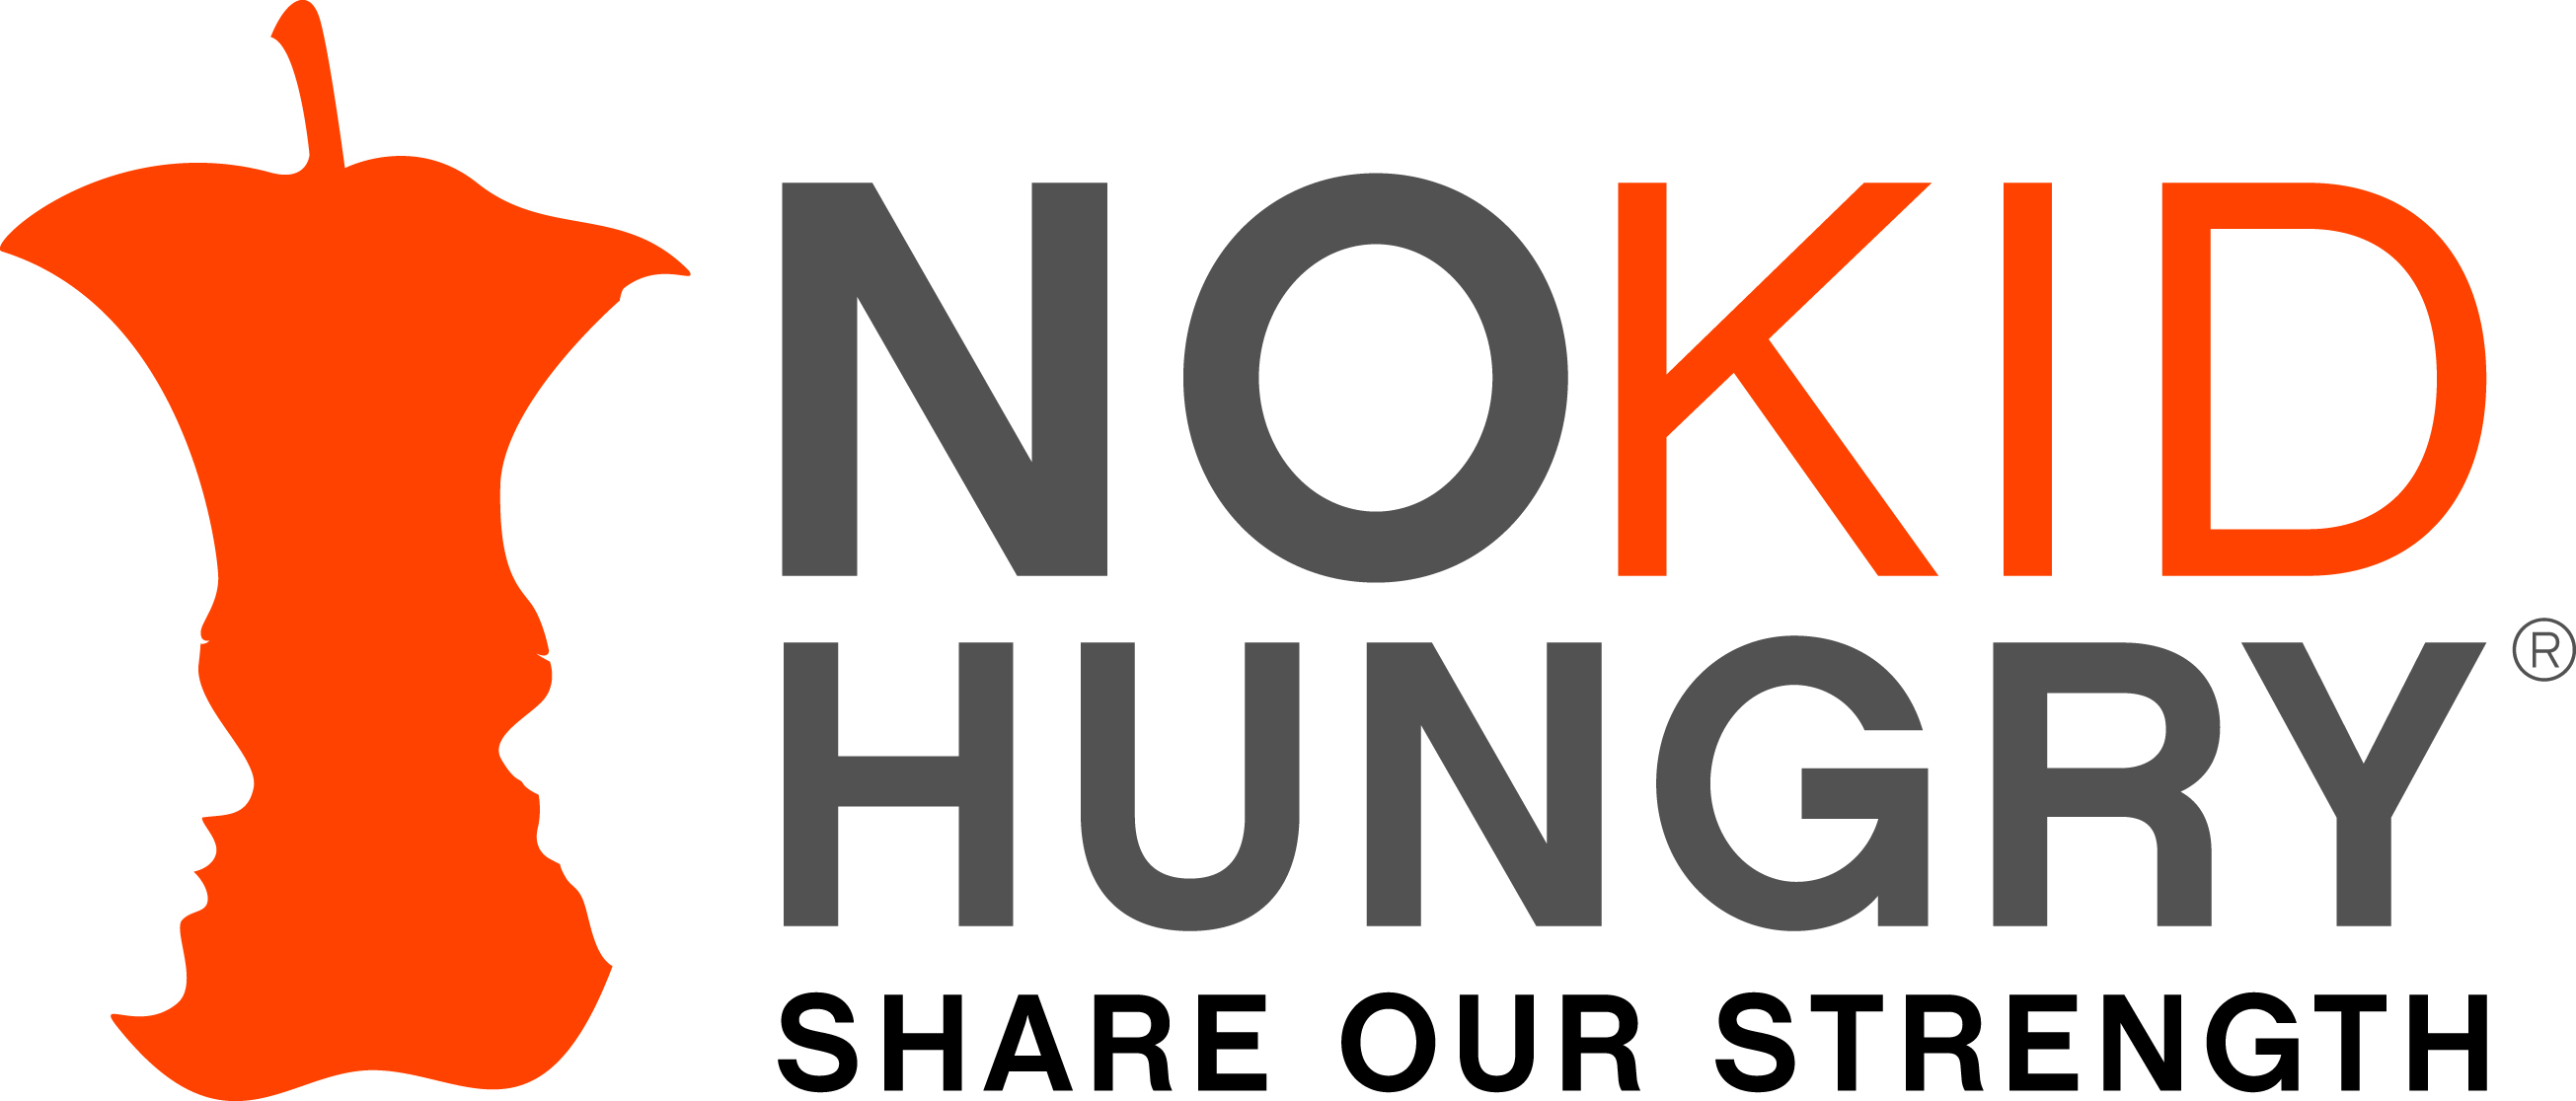 Atlanta's Taste of the Nation for No Kid Hungry Returns on April 20 -  Premier Agency